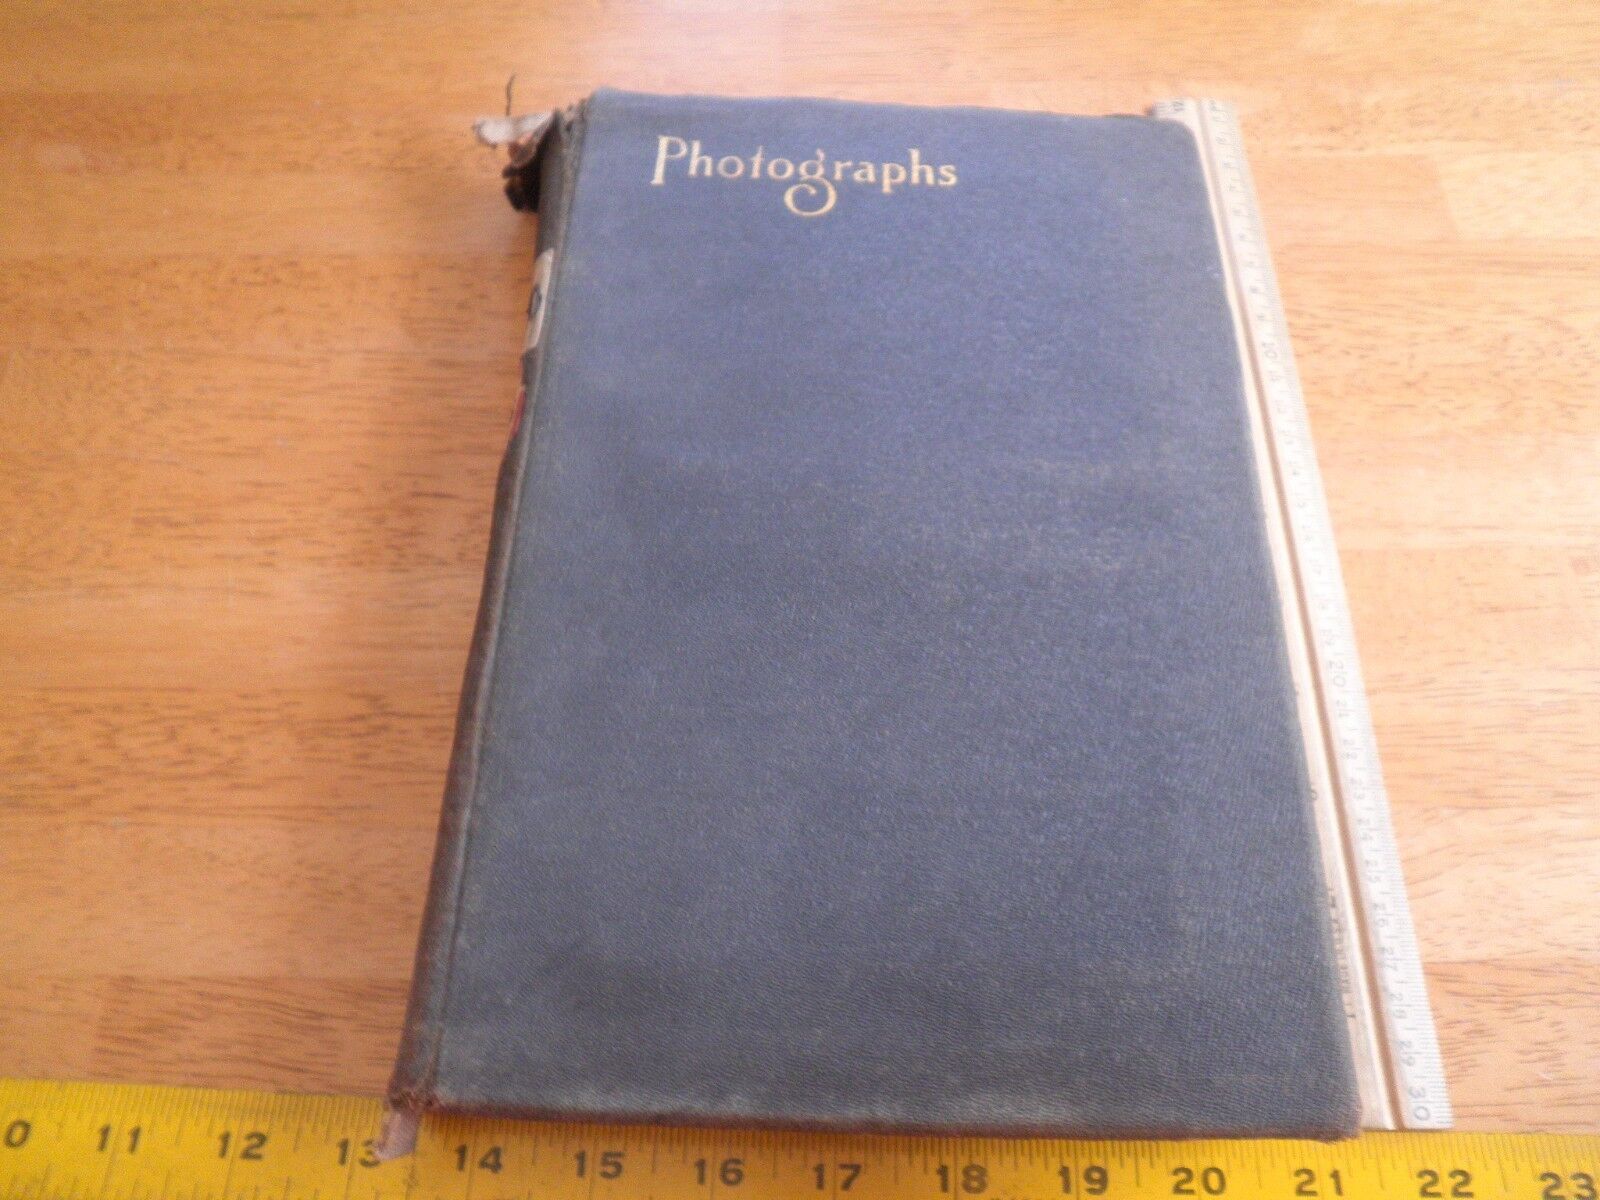 Physics VINTAGE 1910's Photographs book machines contraptions etc